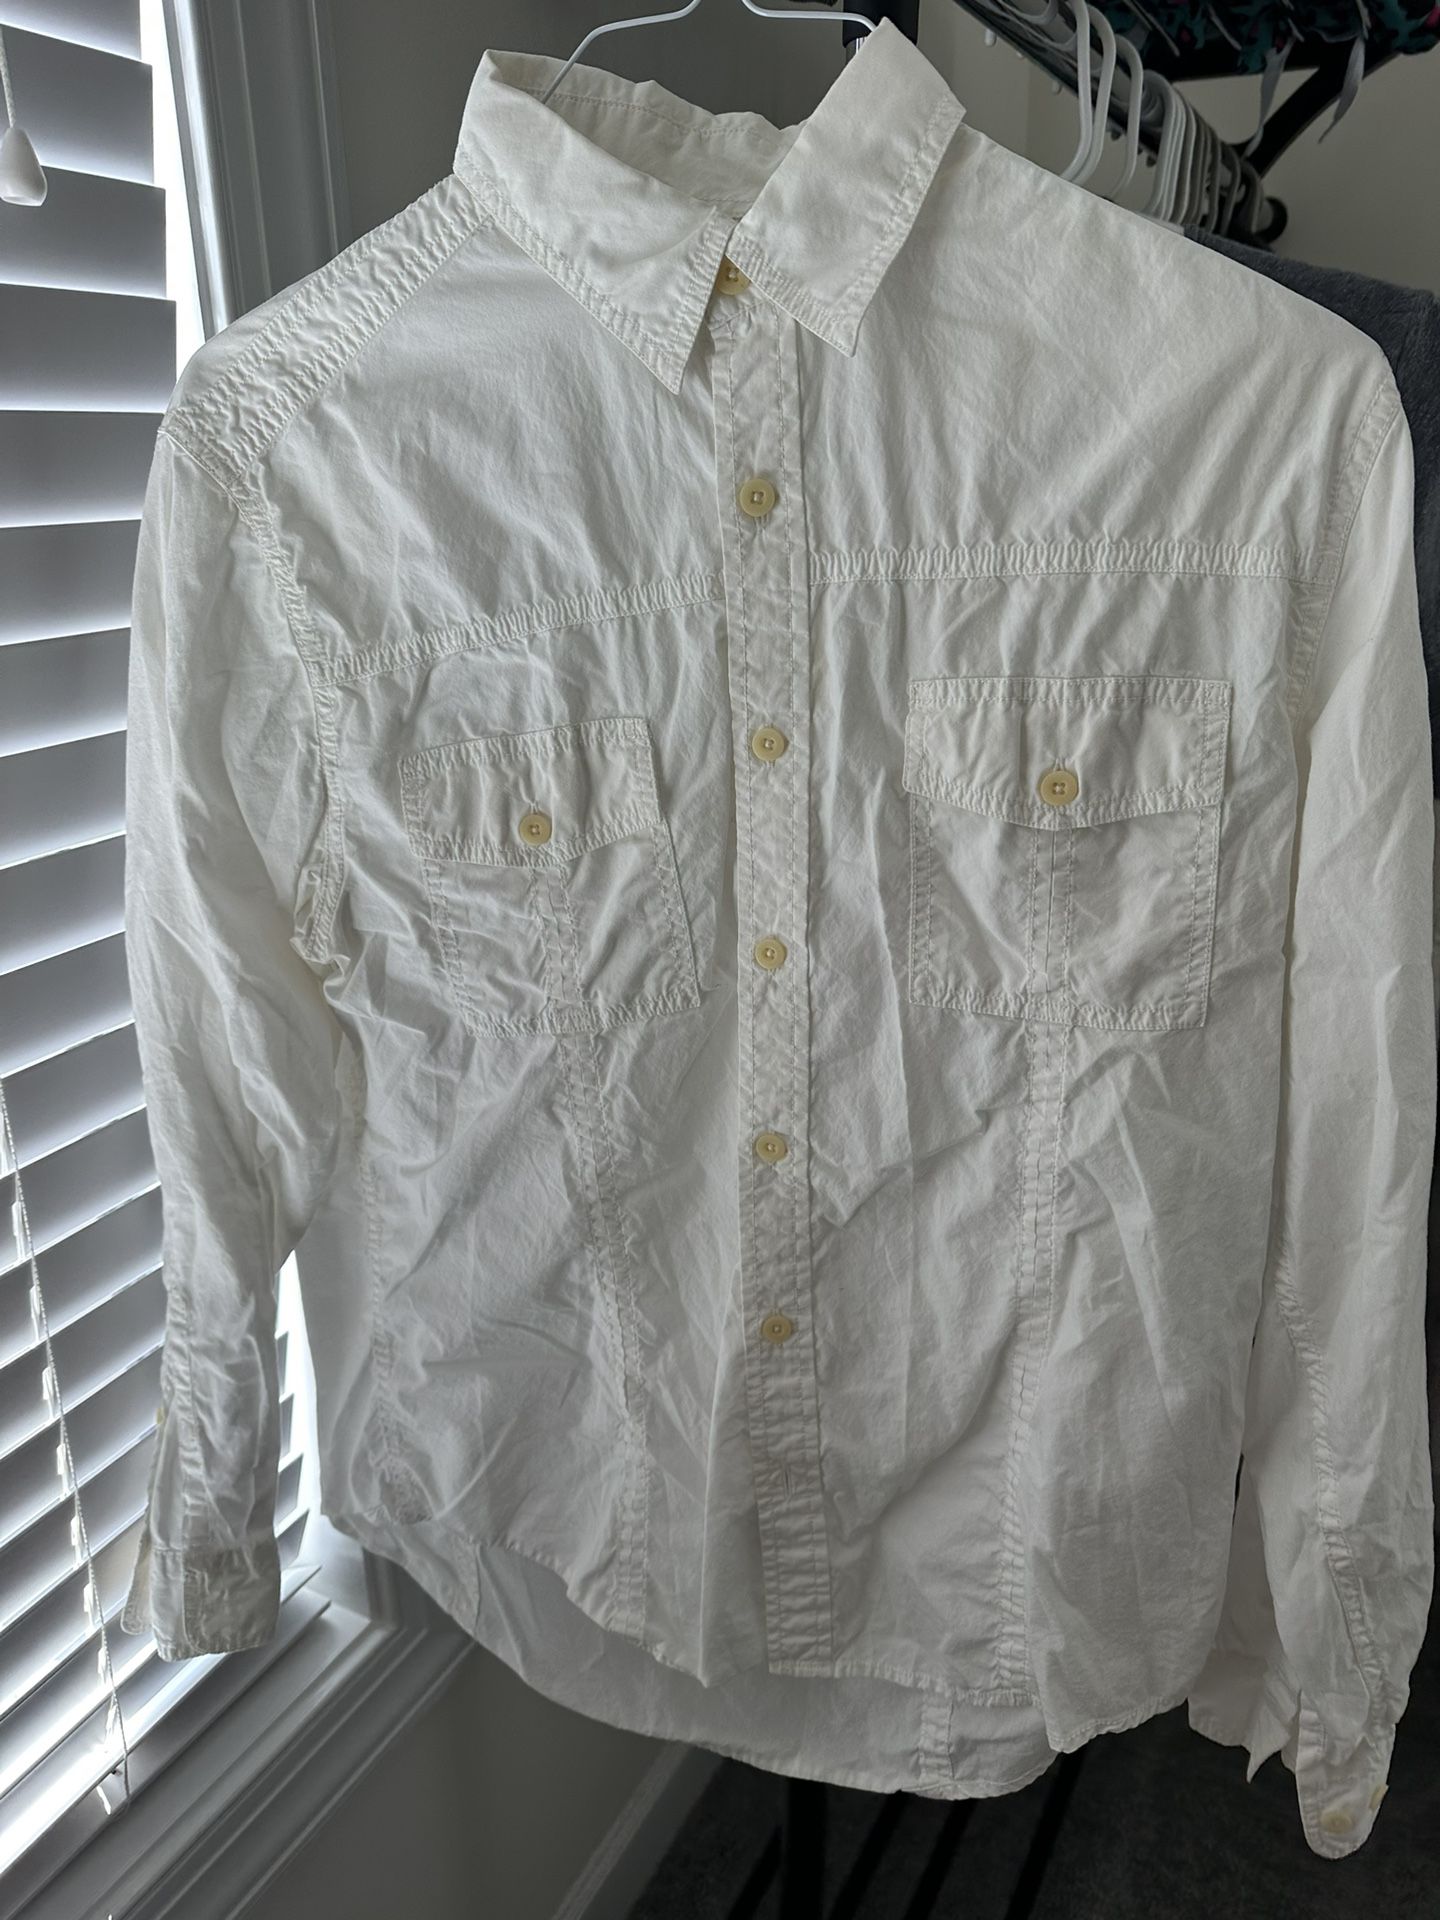 Perry Ellis Button Shirt - Medium